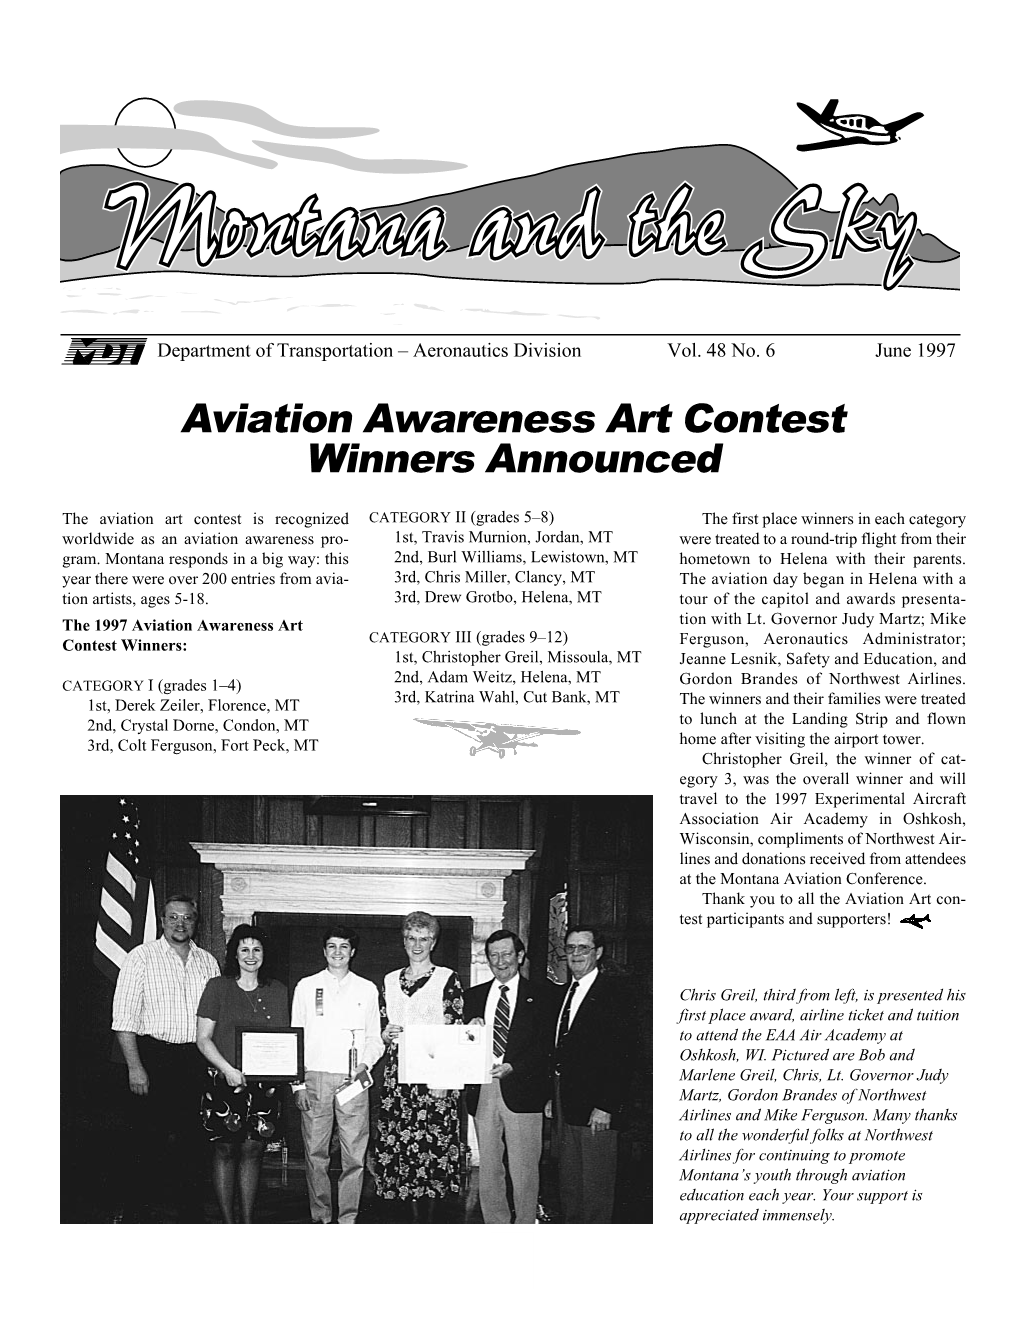 Aviation Awareness Art Contest Winners Announced